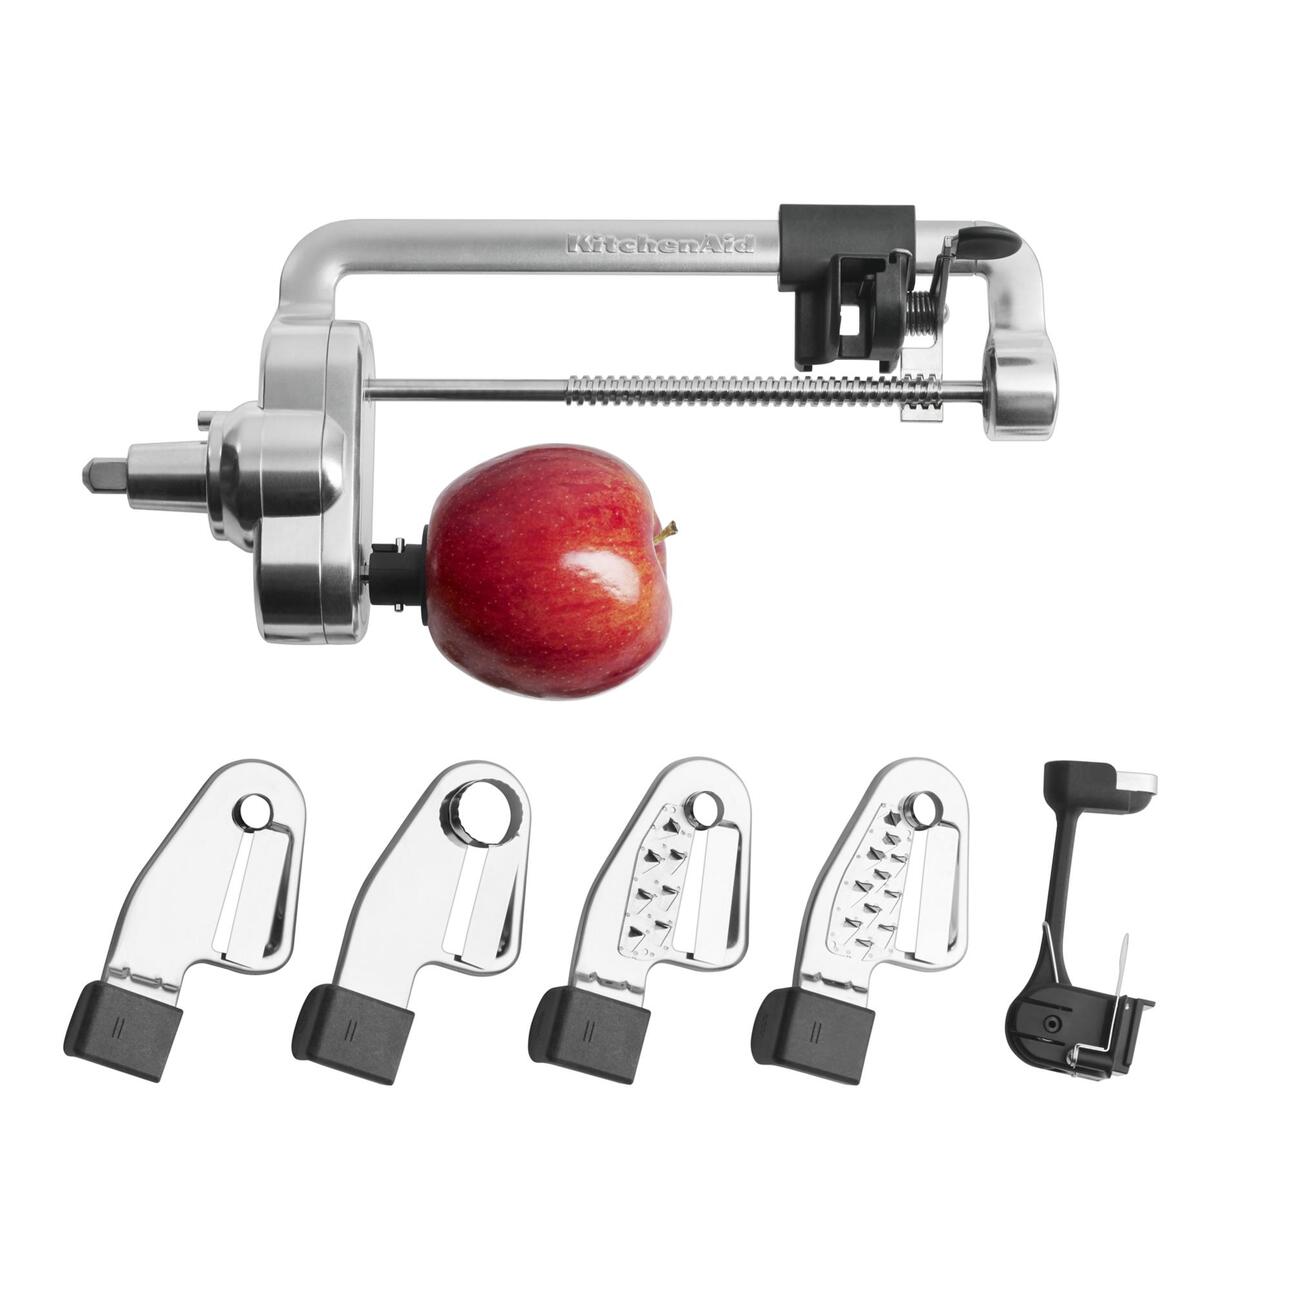 KitchenAid Spiralizer with Peel, Core and Slice - KSM1APC - image 3 of 14